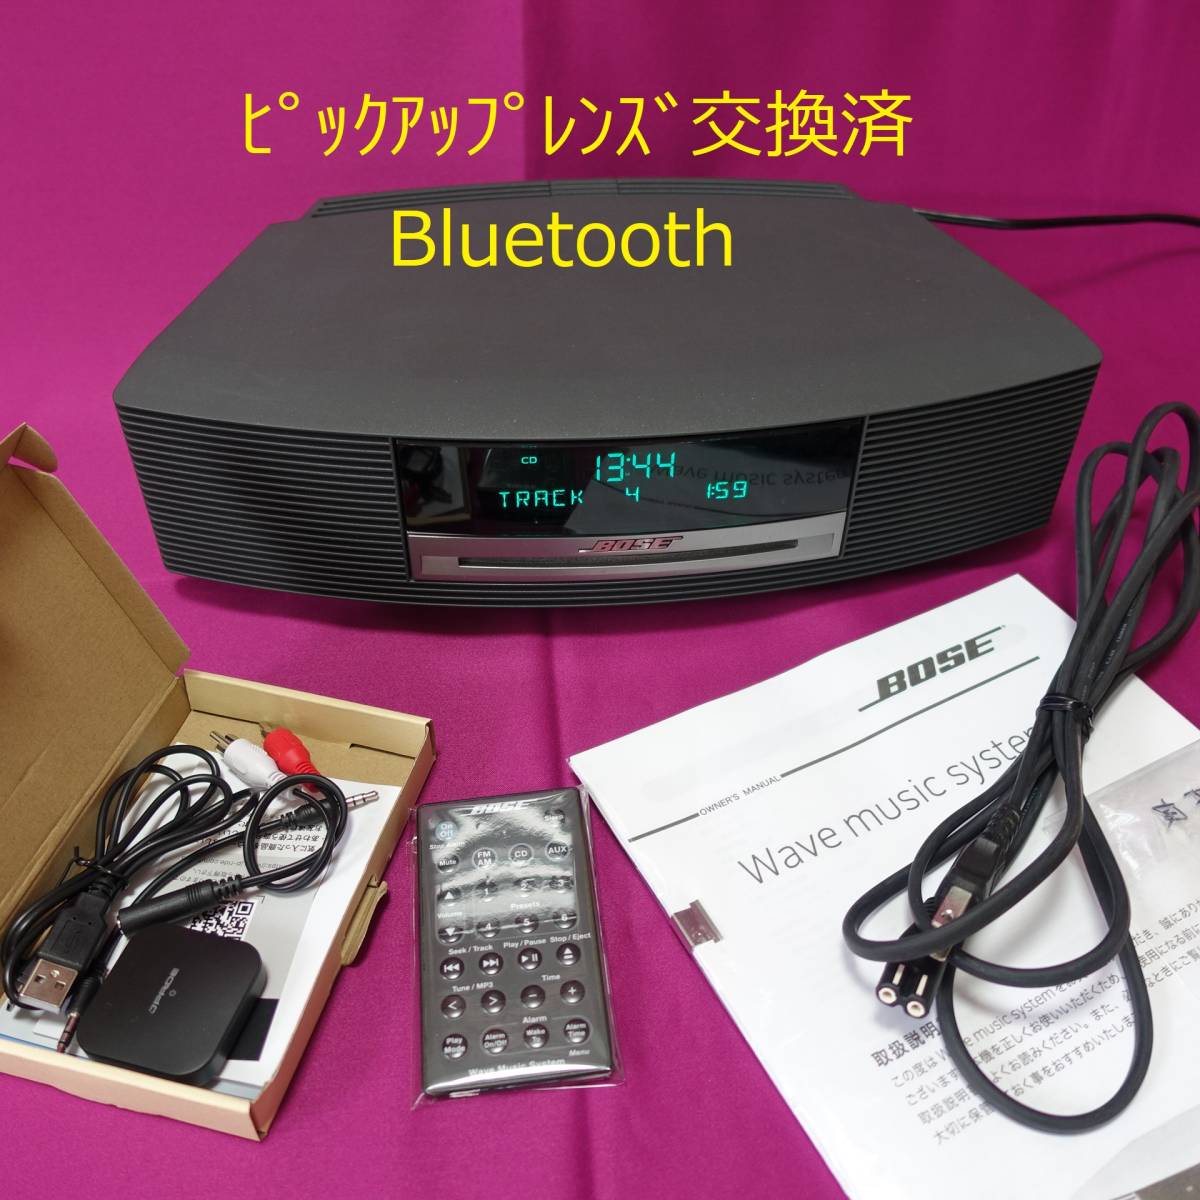 ◆ Bluetooth ◆ BOSE Wave Music System AWRCCB ◆ ピックアップレンズ交換